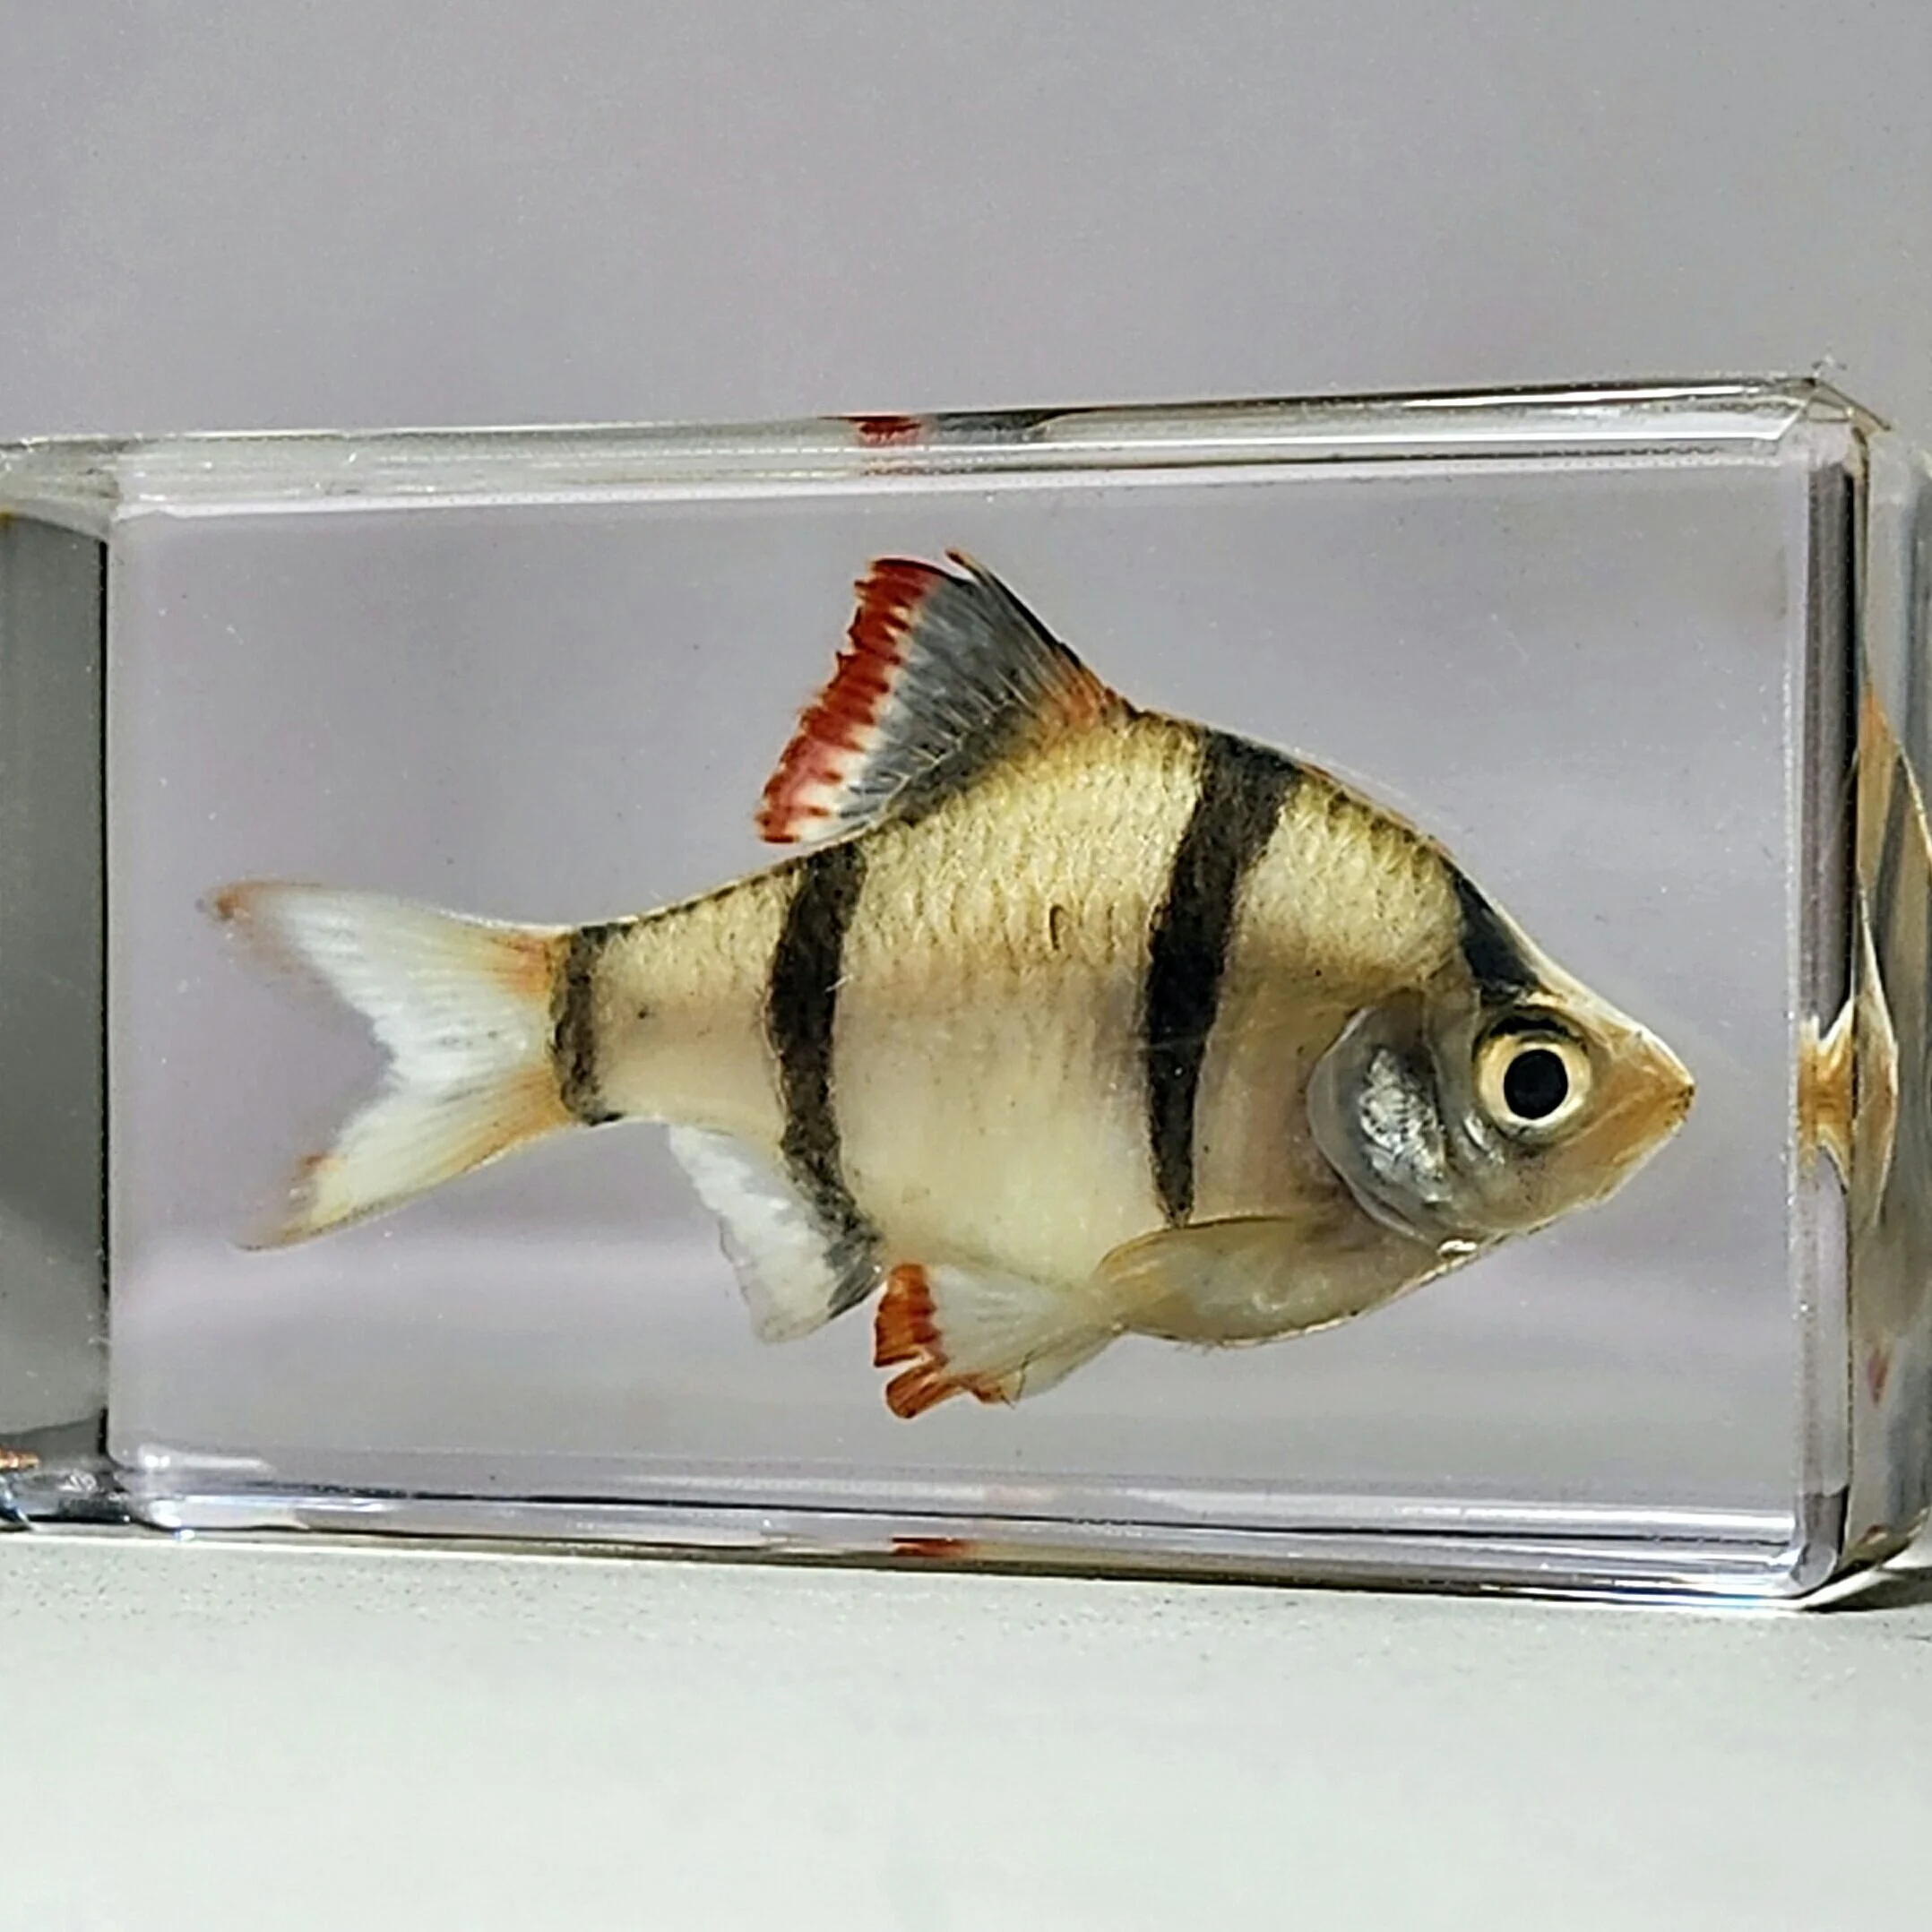 barb fish species